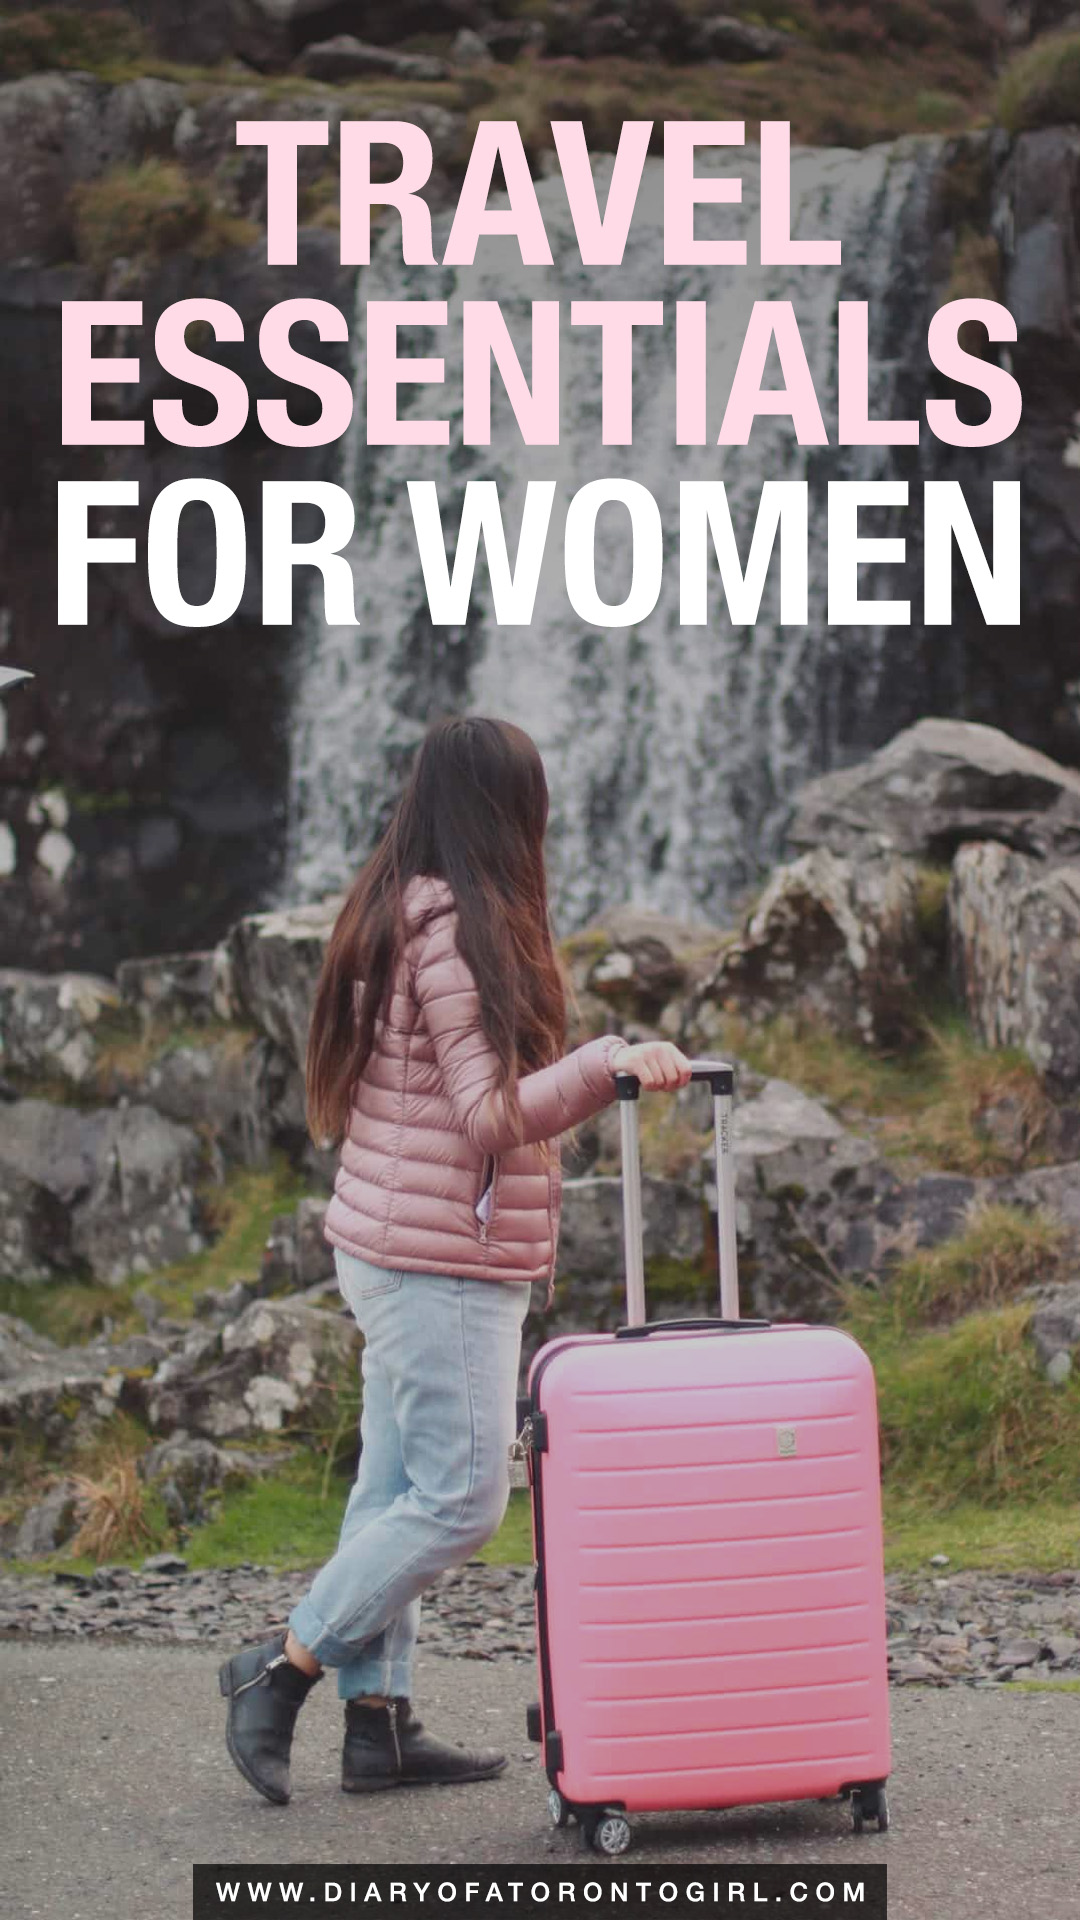 Travel essentials for women